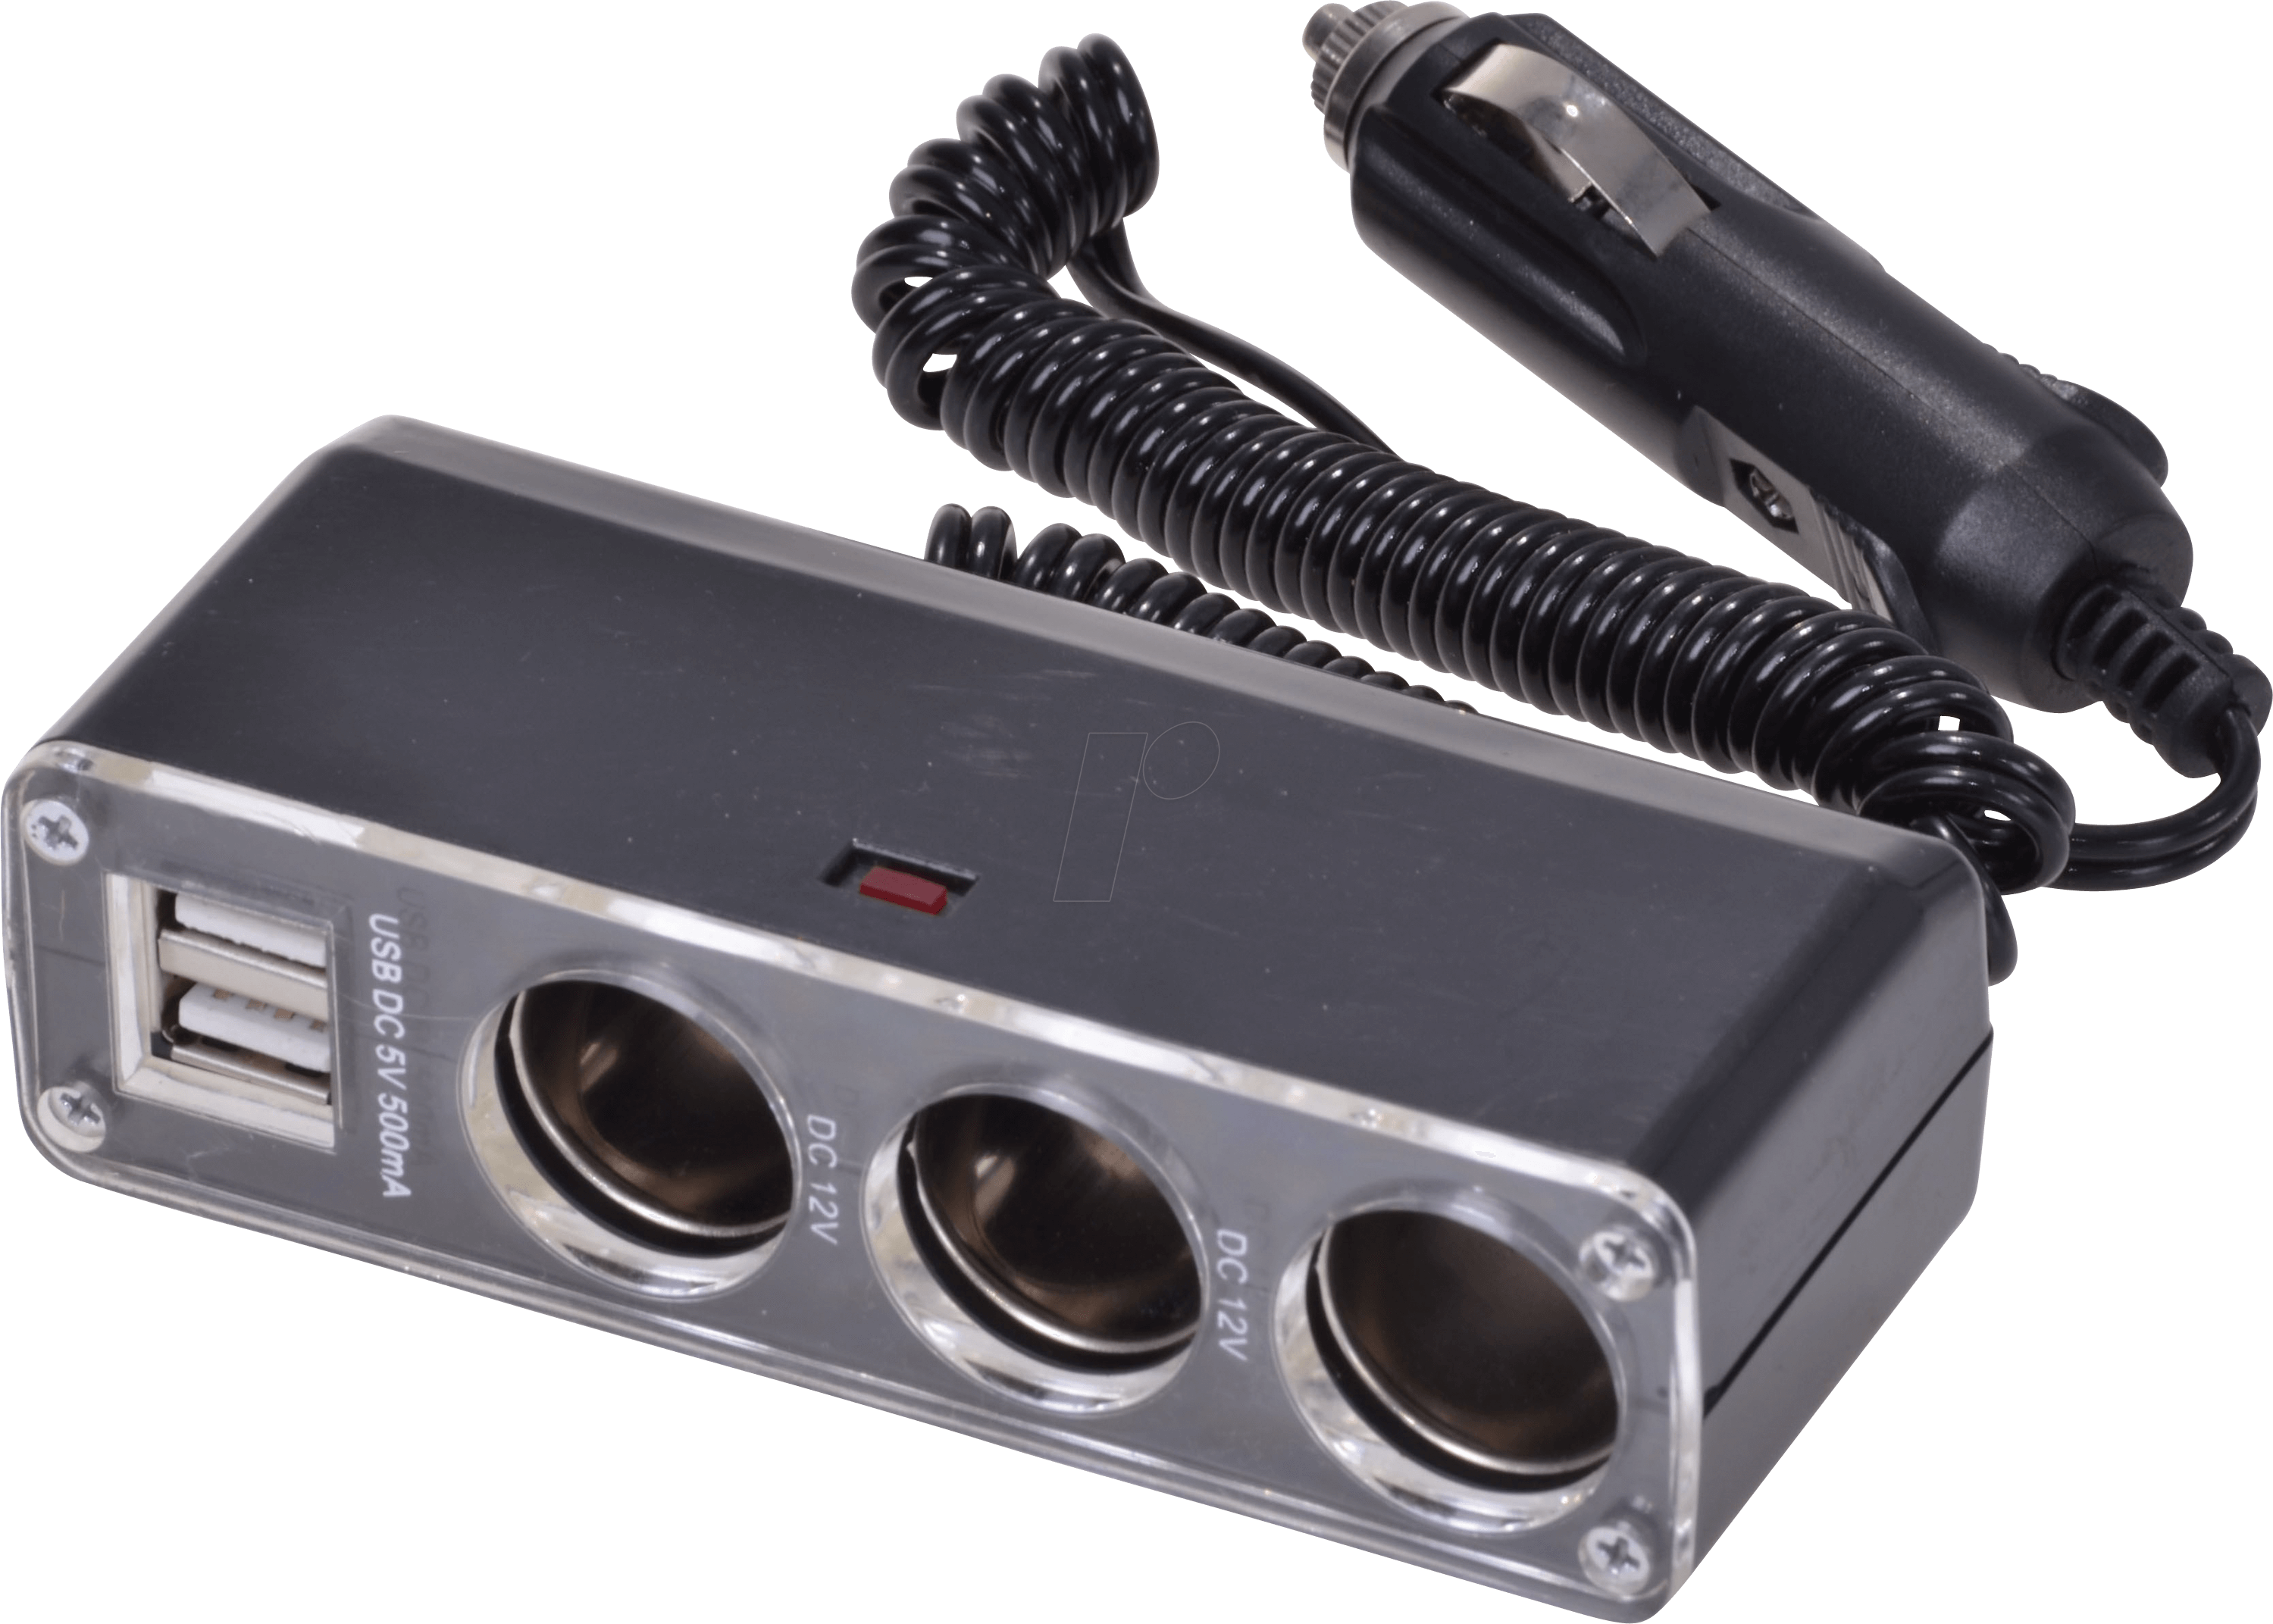 KFZ 36642: KFZ - Steckdose, 3-fach + 2x USB, 12V bei reichelt elektronik